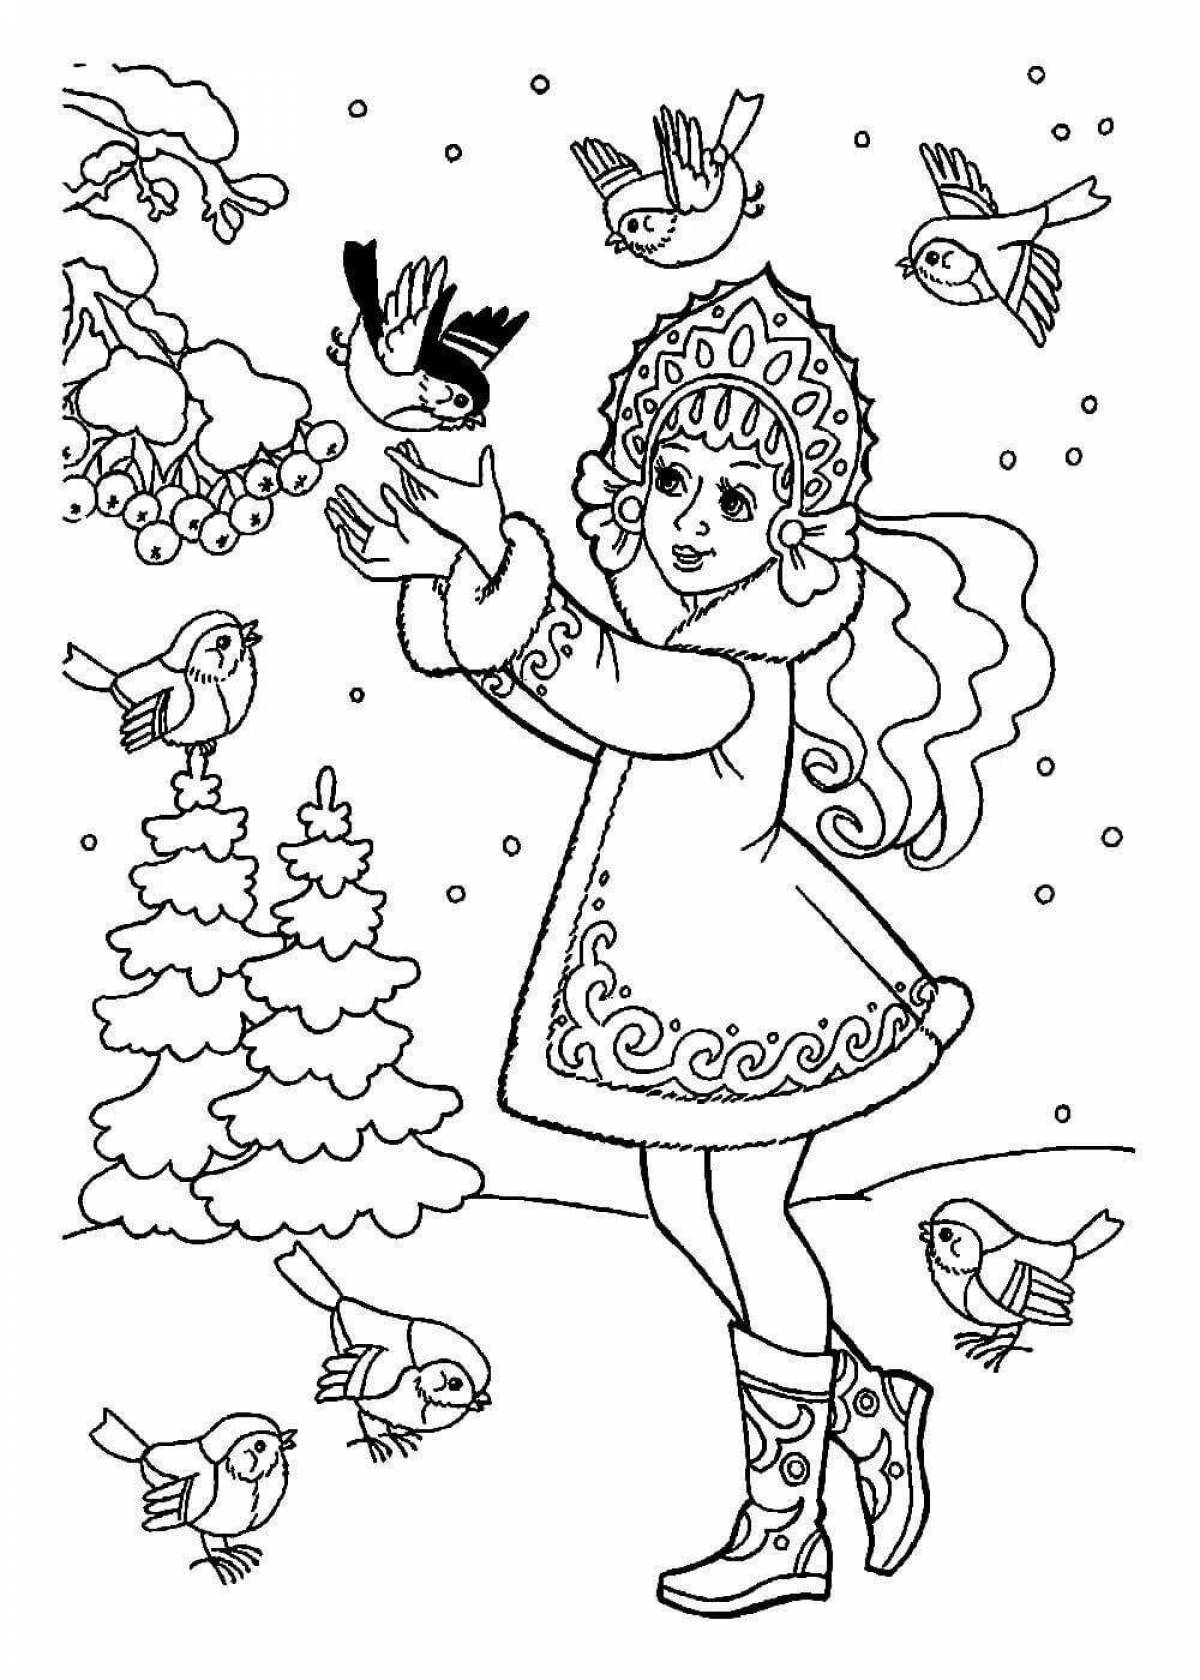 Great winter fantasy coloring book